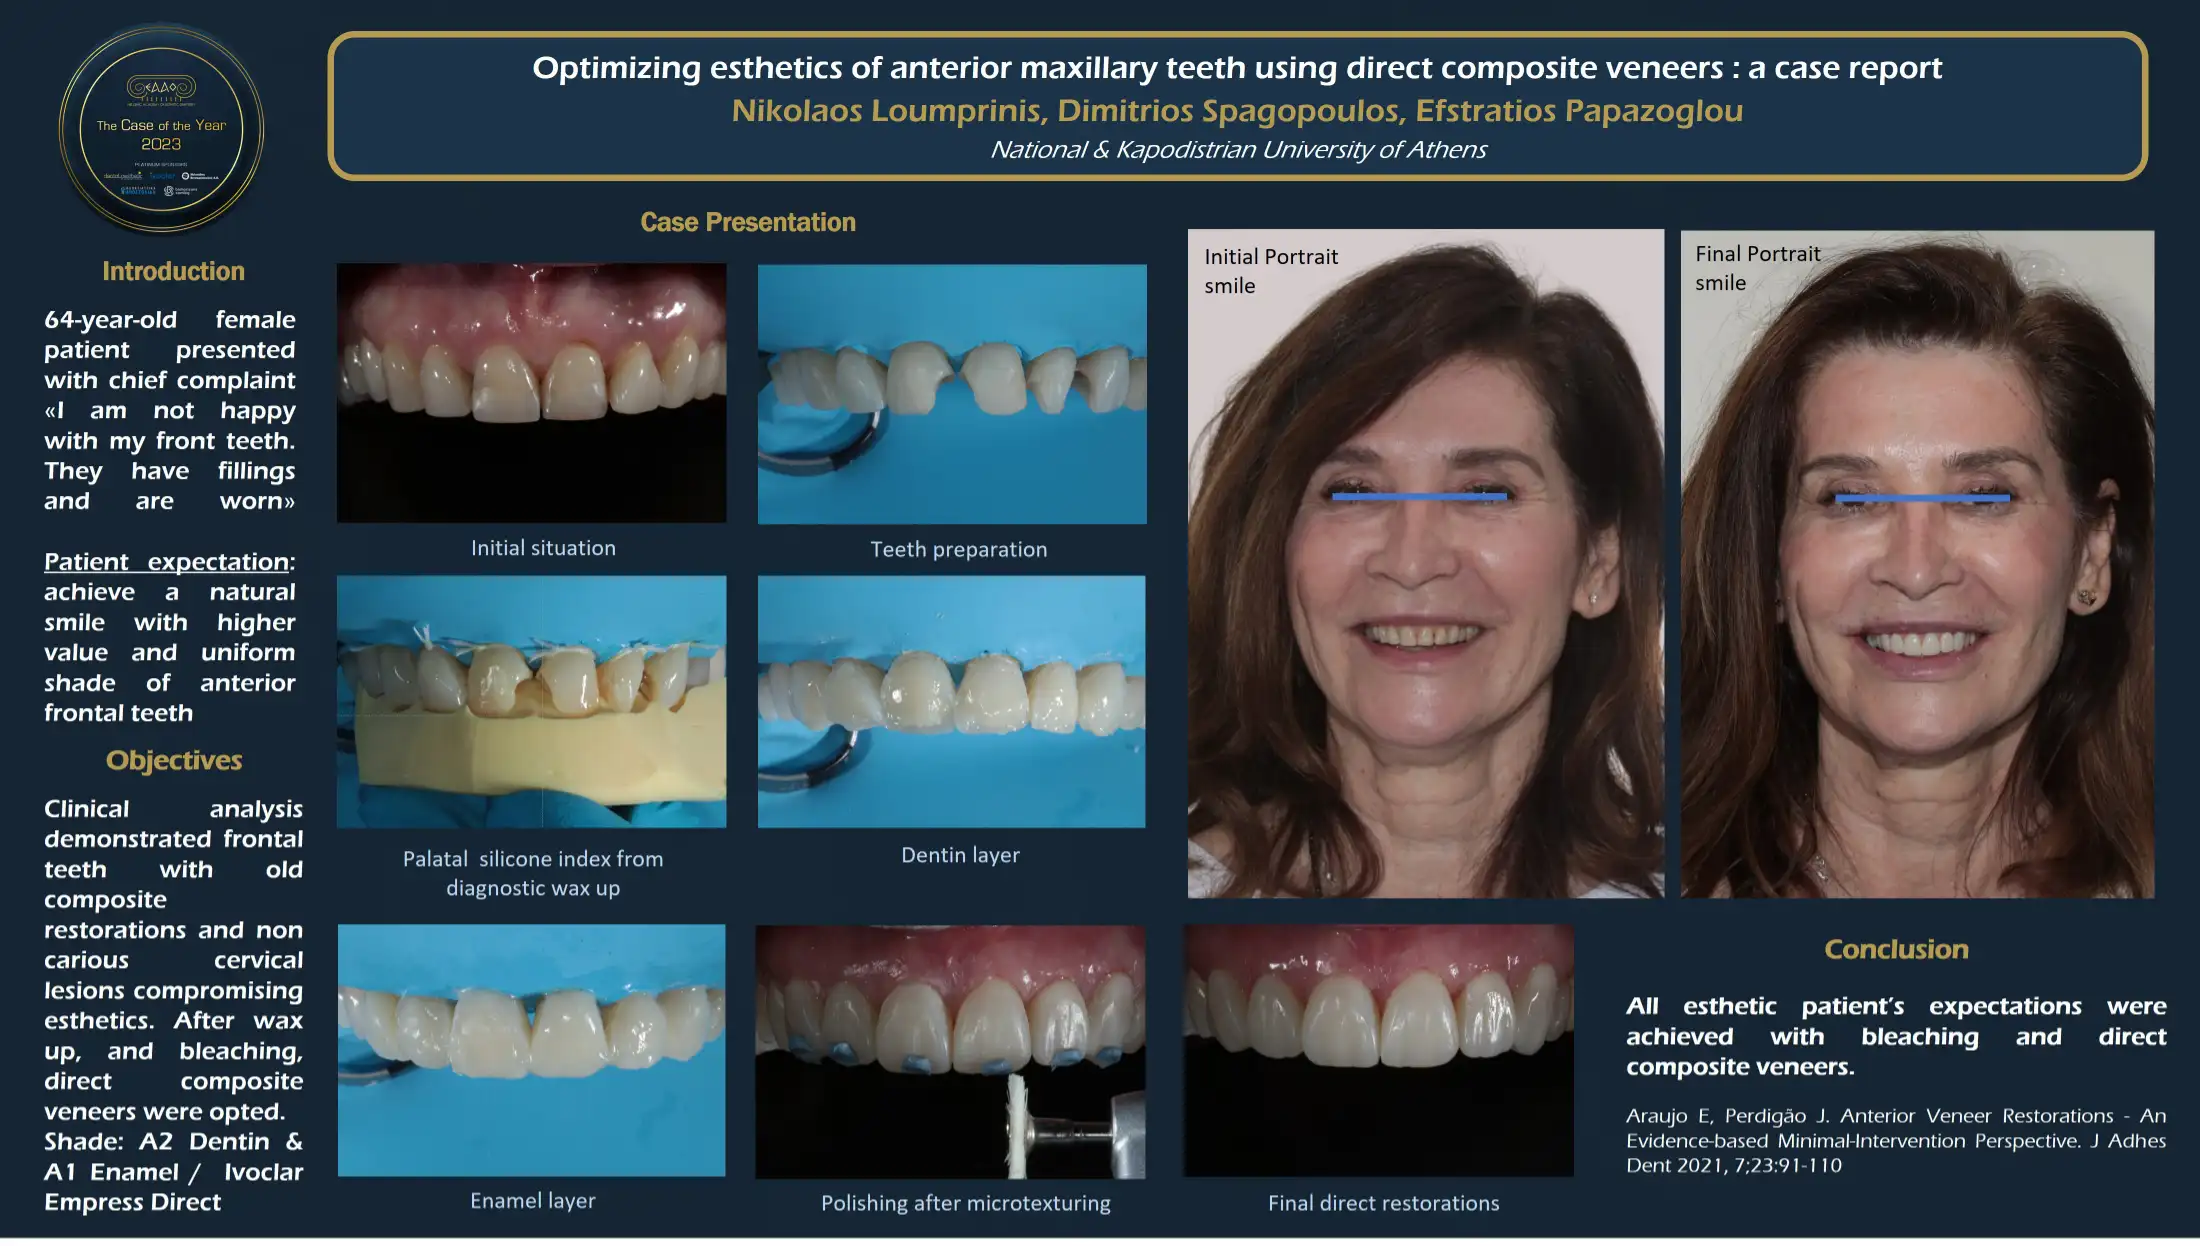 Optimizing esthetics of anterior maxillary teeth using direct composite veneers: a case report.